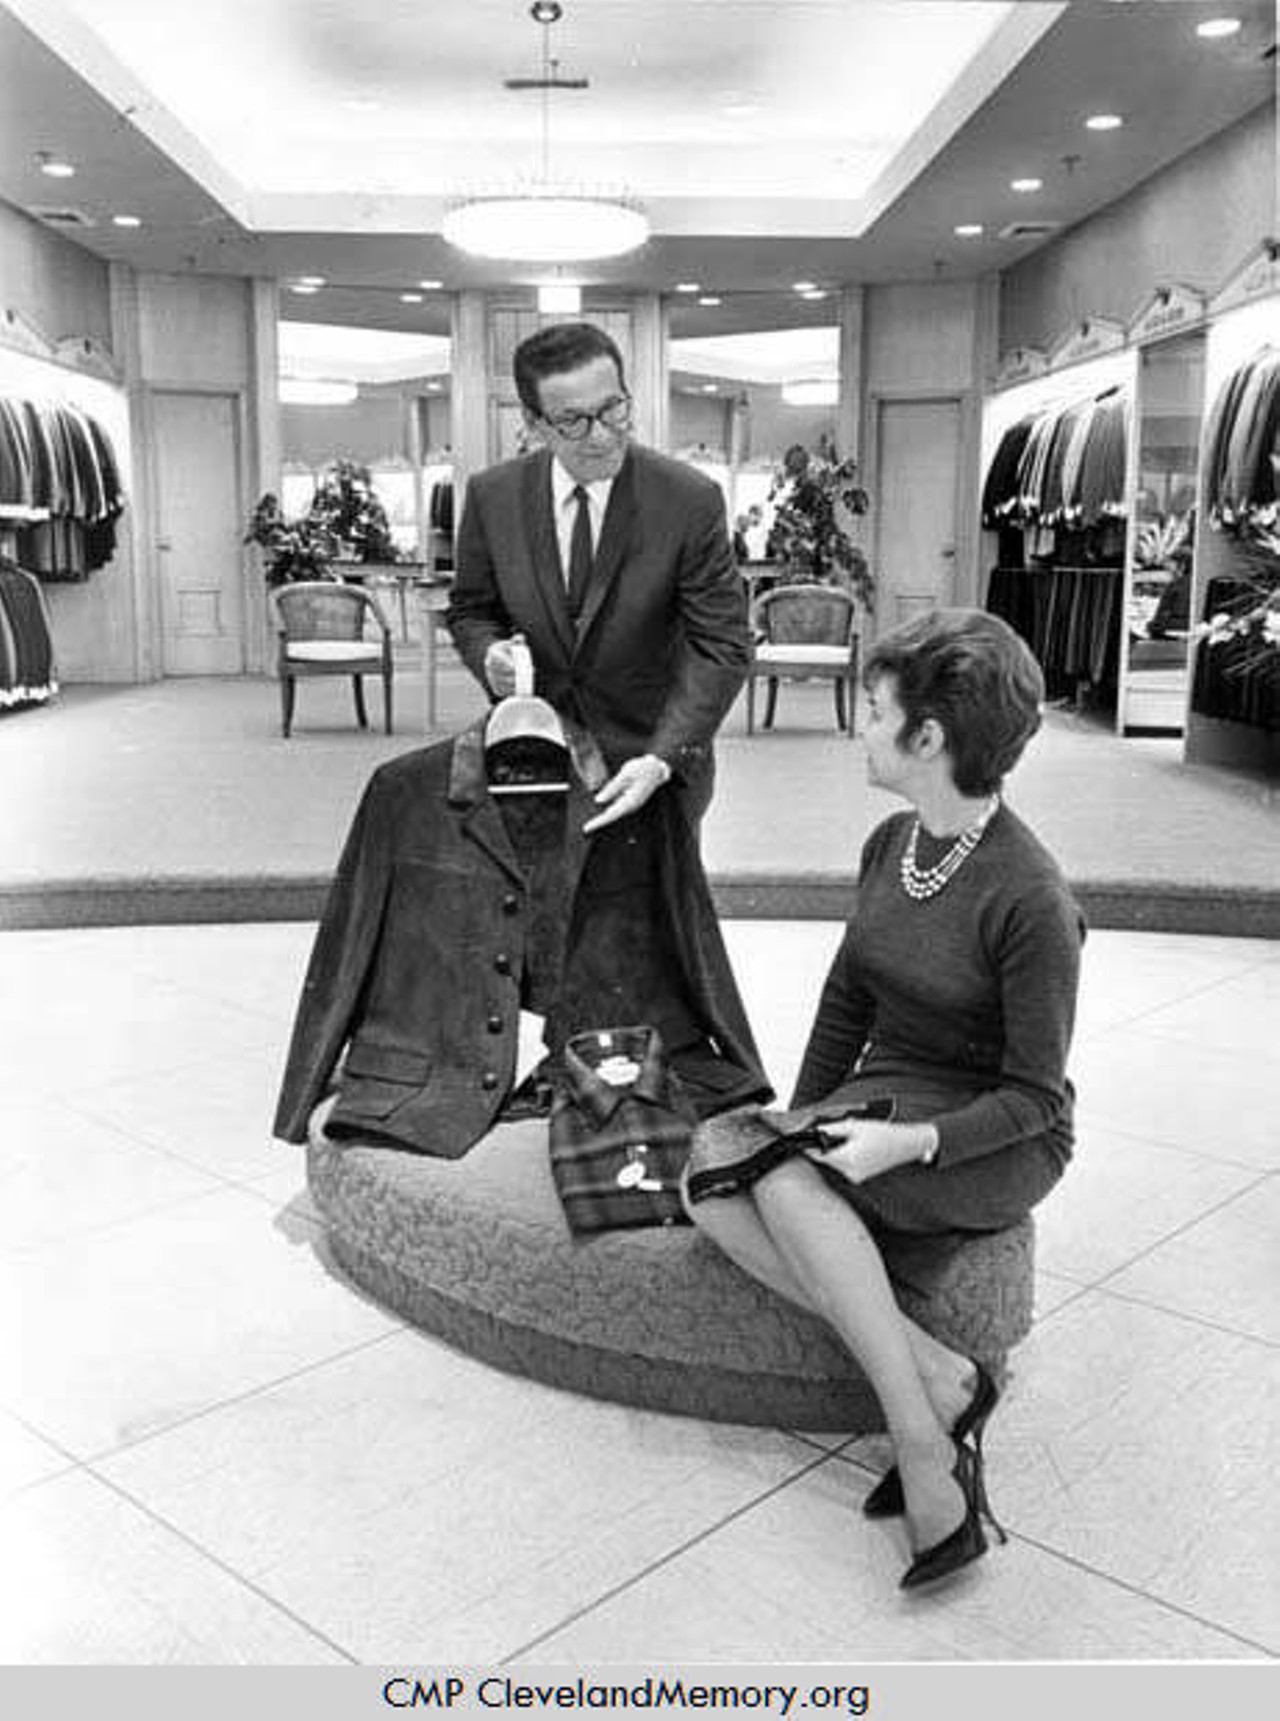 ''Joe Harris Men's Store Severance Center. Joe Harris & Sally Hitter.'' — photo verso, 1963